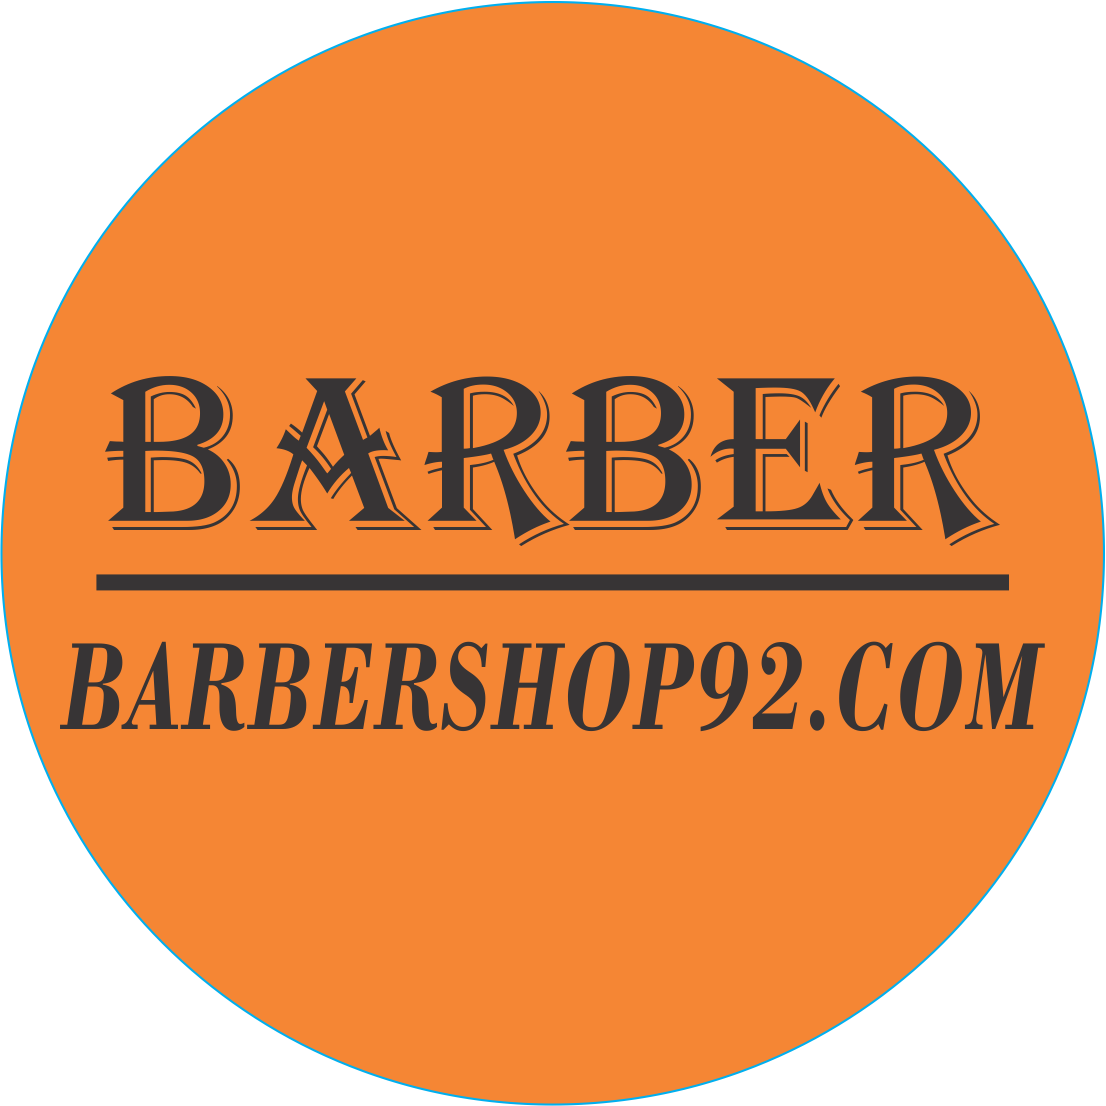 Barbershop92.com